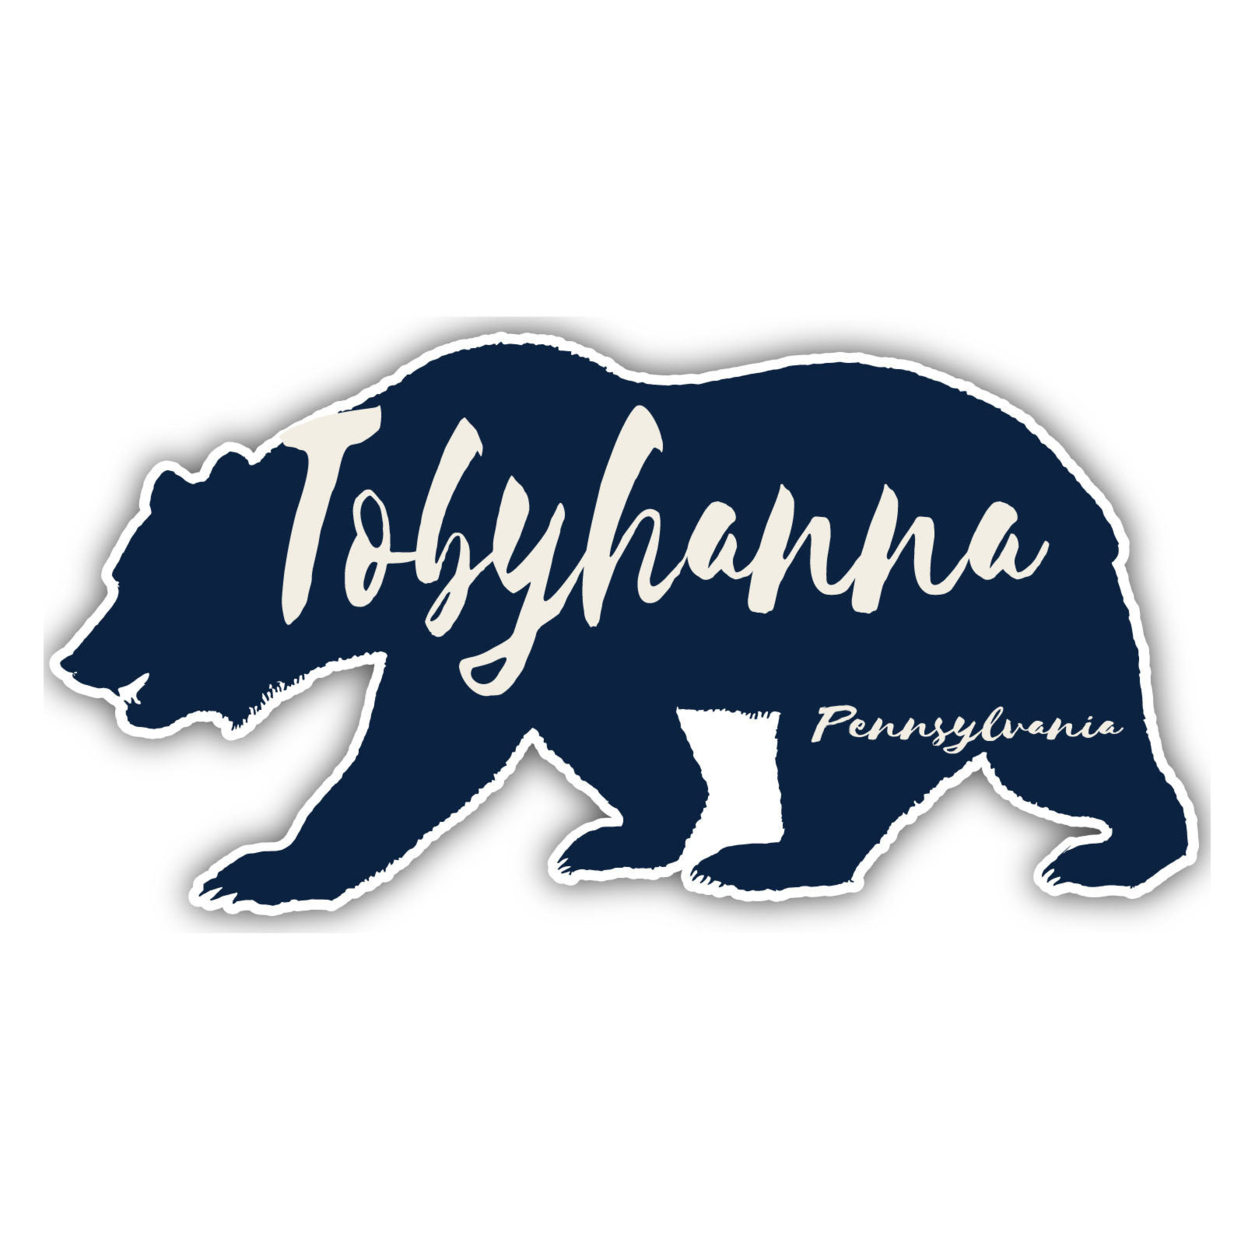 Tobyhanna Pennsylvania Souvenir Decorative Stickers (Choose Theme And Size) - Single Unit, 2-Inch, Bear